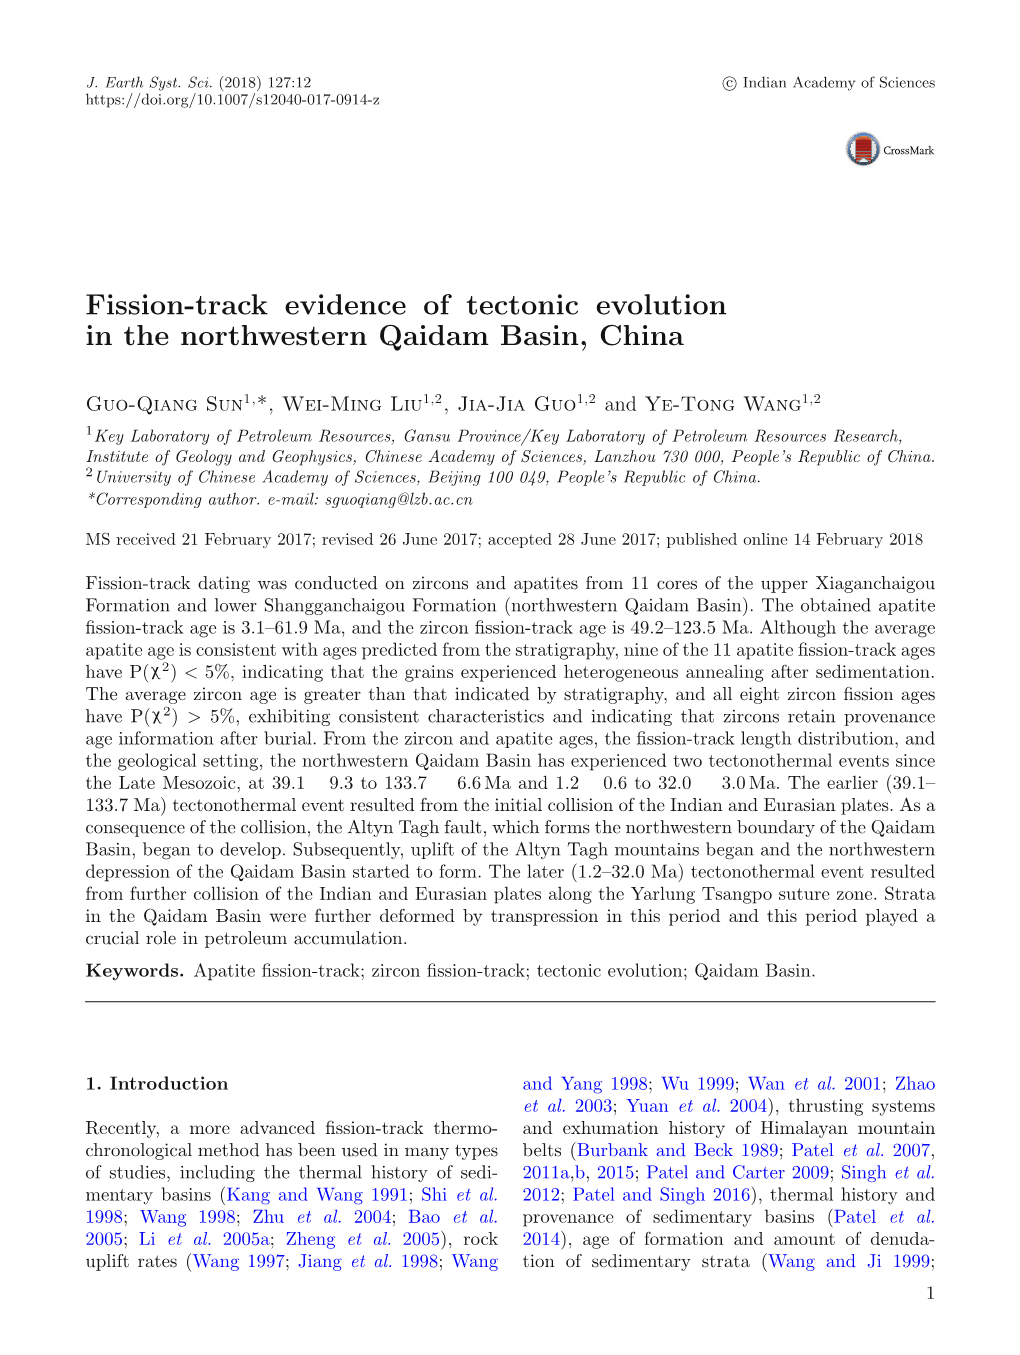 Fission-Track Evidence of Tectonic Evolution in the Northwestern Qaidam Basin, China